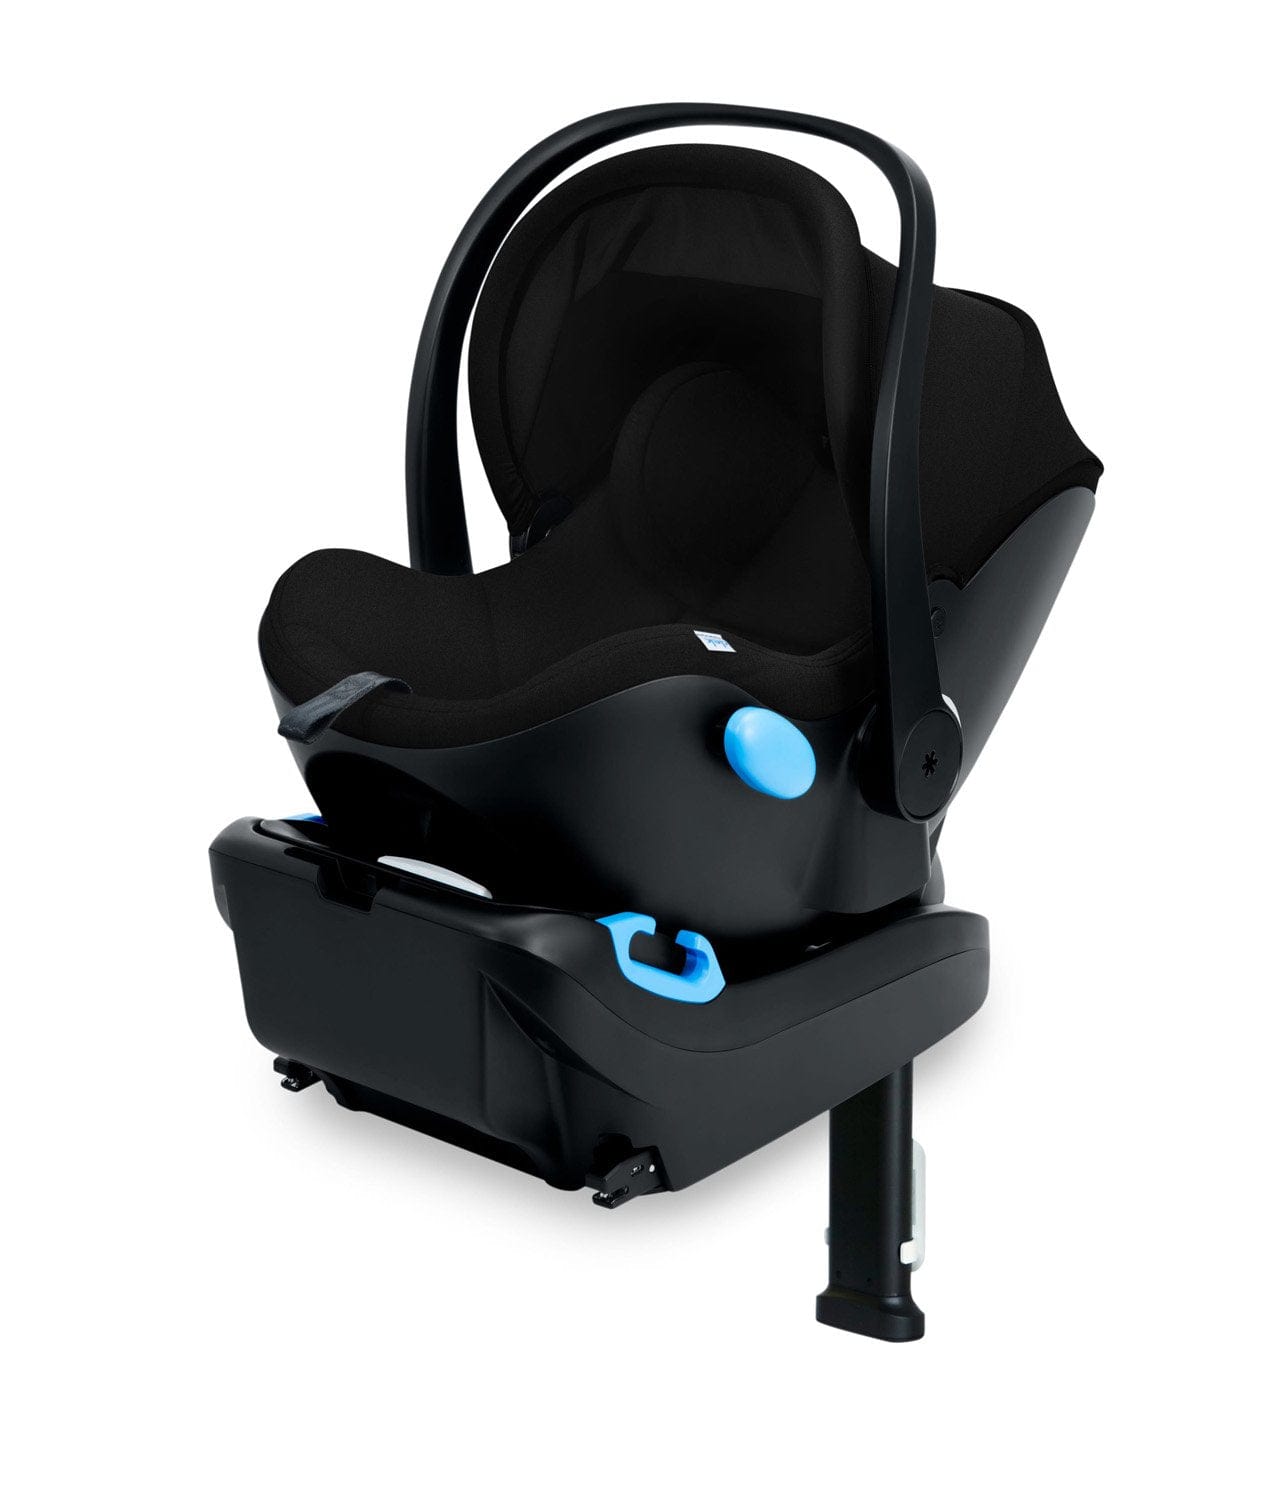 Clek infant car seat Clek Liing Infant Car Seat - Pitch Black